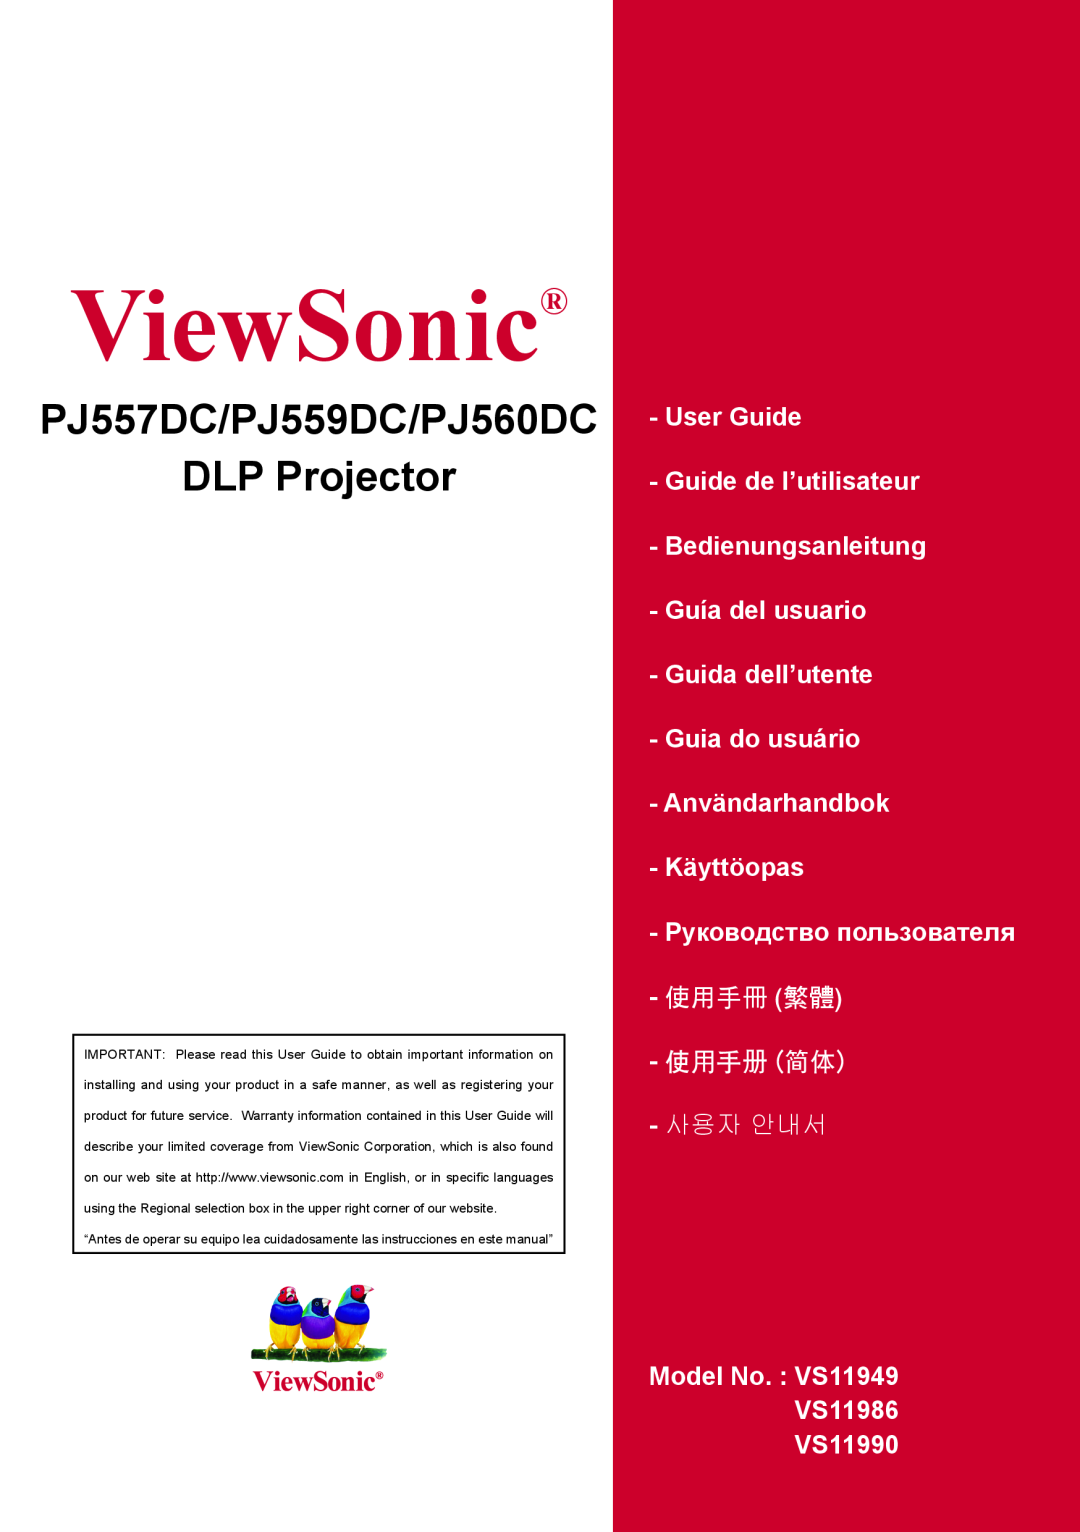 ViewSonic VS11986, VS11990 manual ViewSonic, PJD6220/PJD6230/PJD6240 DLP Projector, Käyttöopas Руководство пользователя 